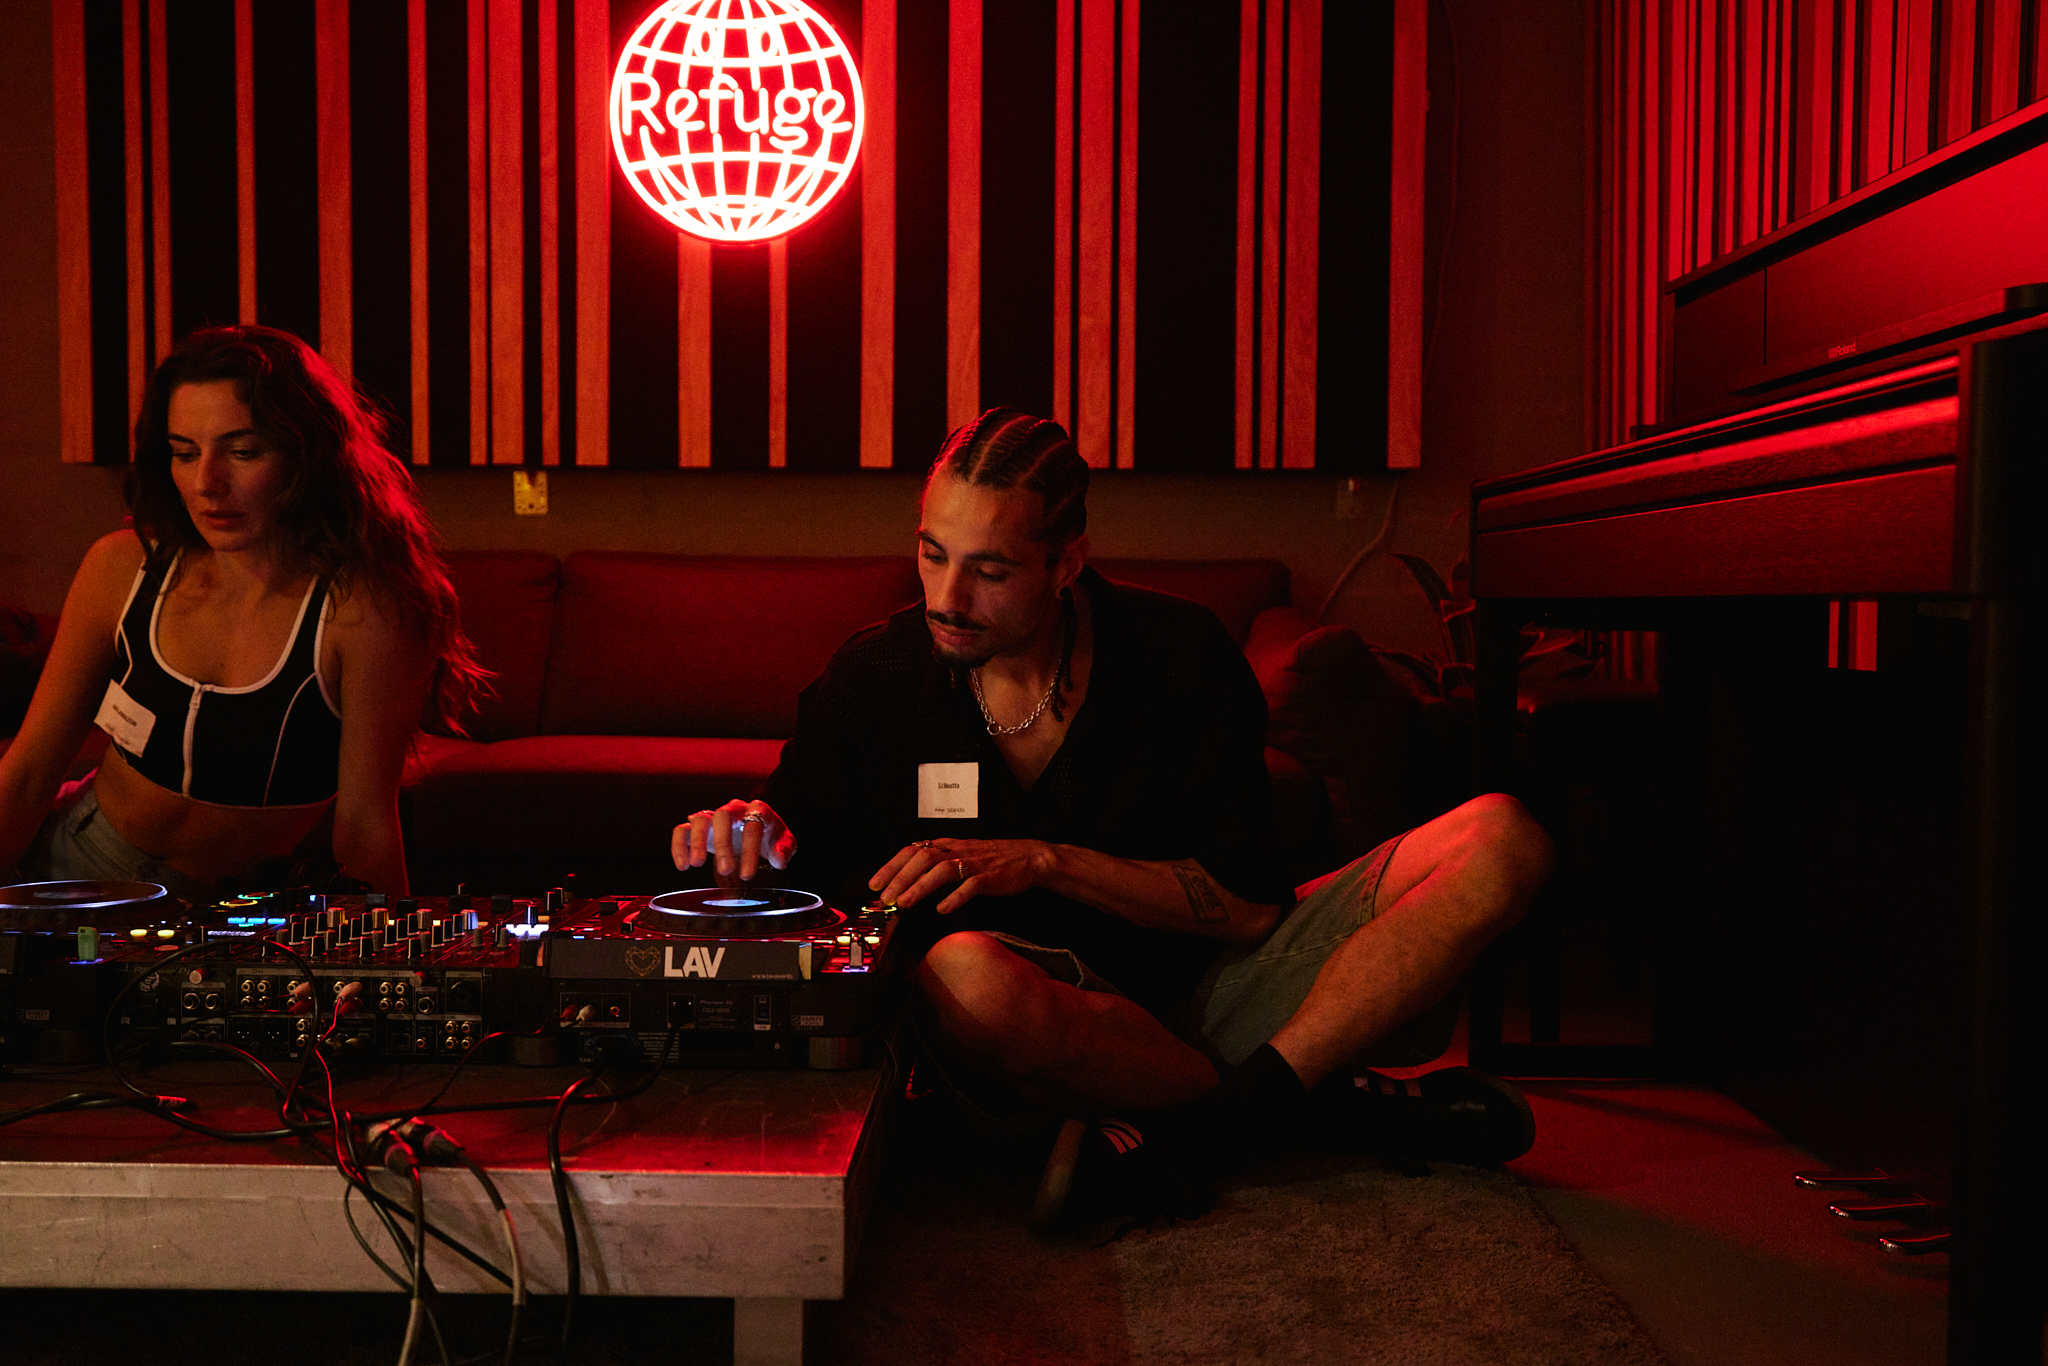 Two DJs sit cross-legged at decks in dim red lighting